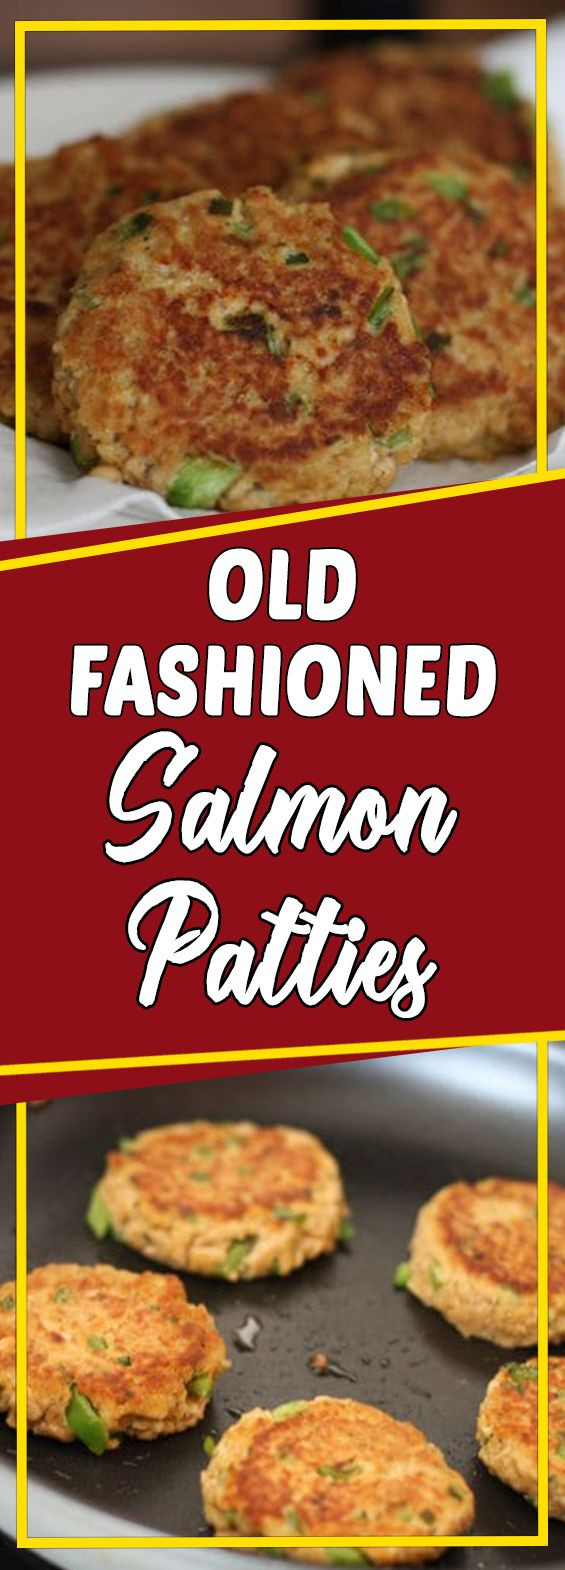 Old Fashion Salmon Patties
 Old Fashioned Salmon Patties